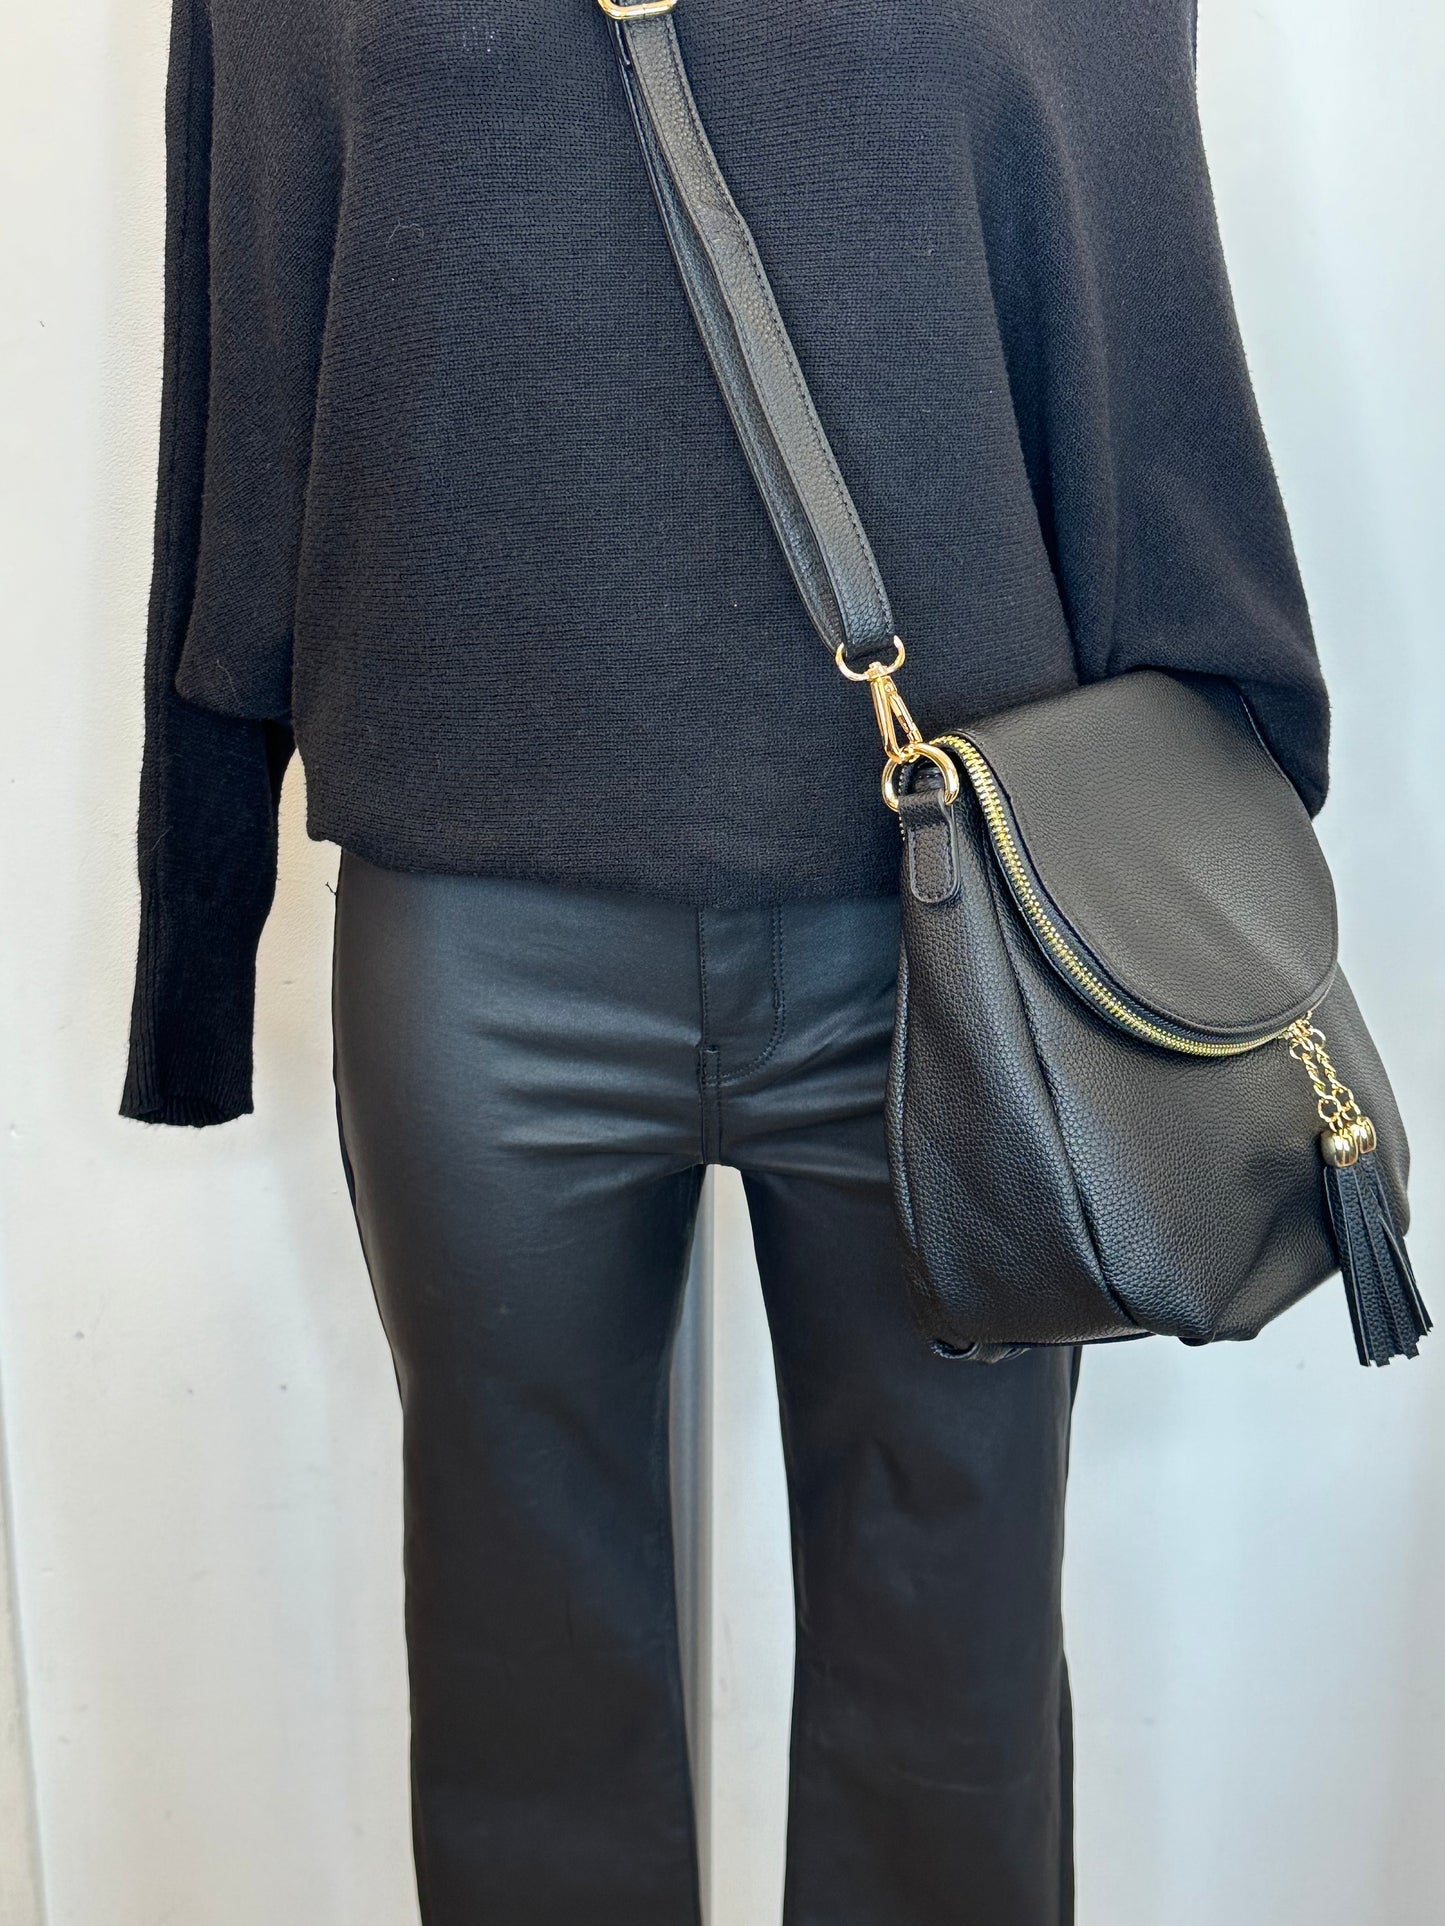 Soft satchel tassel bag - Black colour